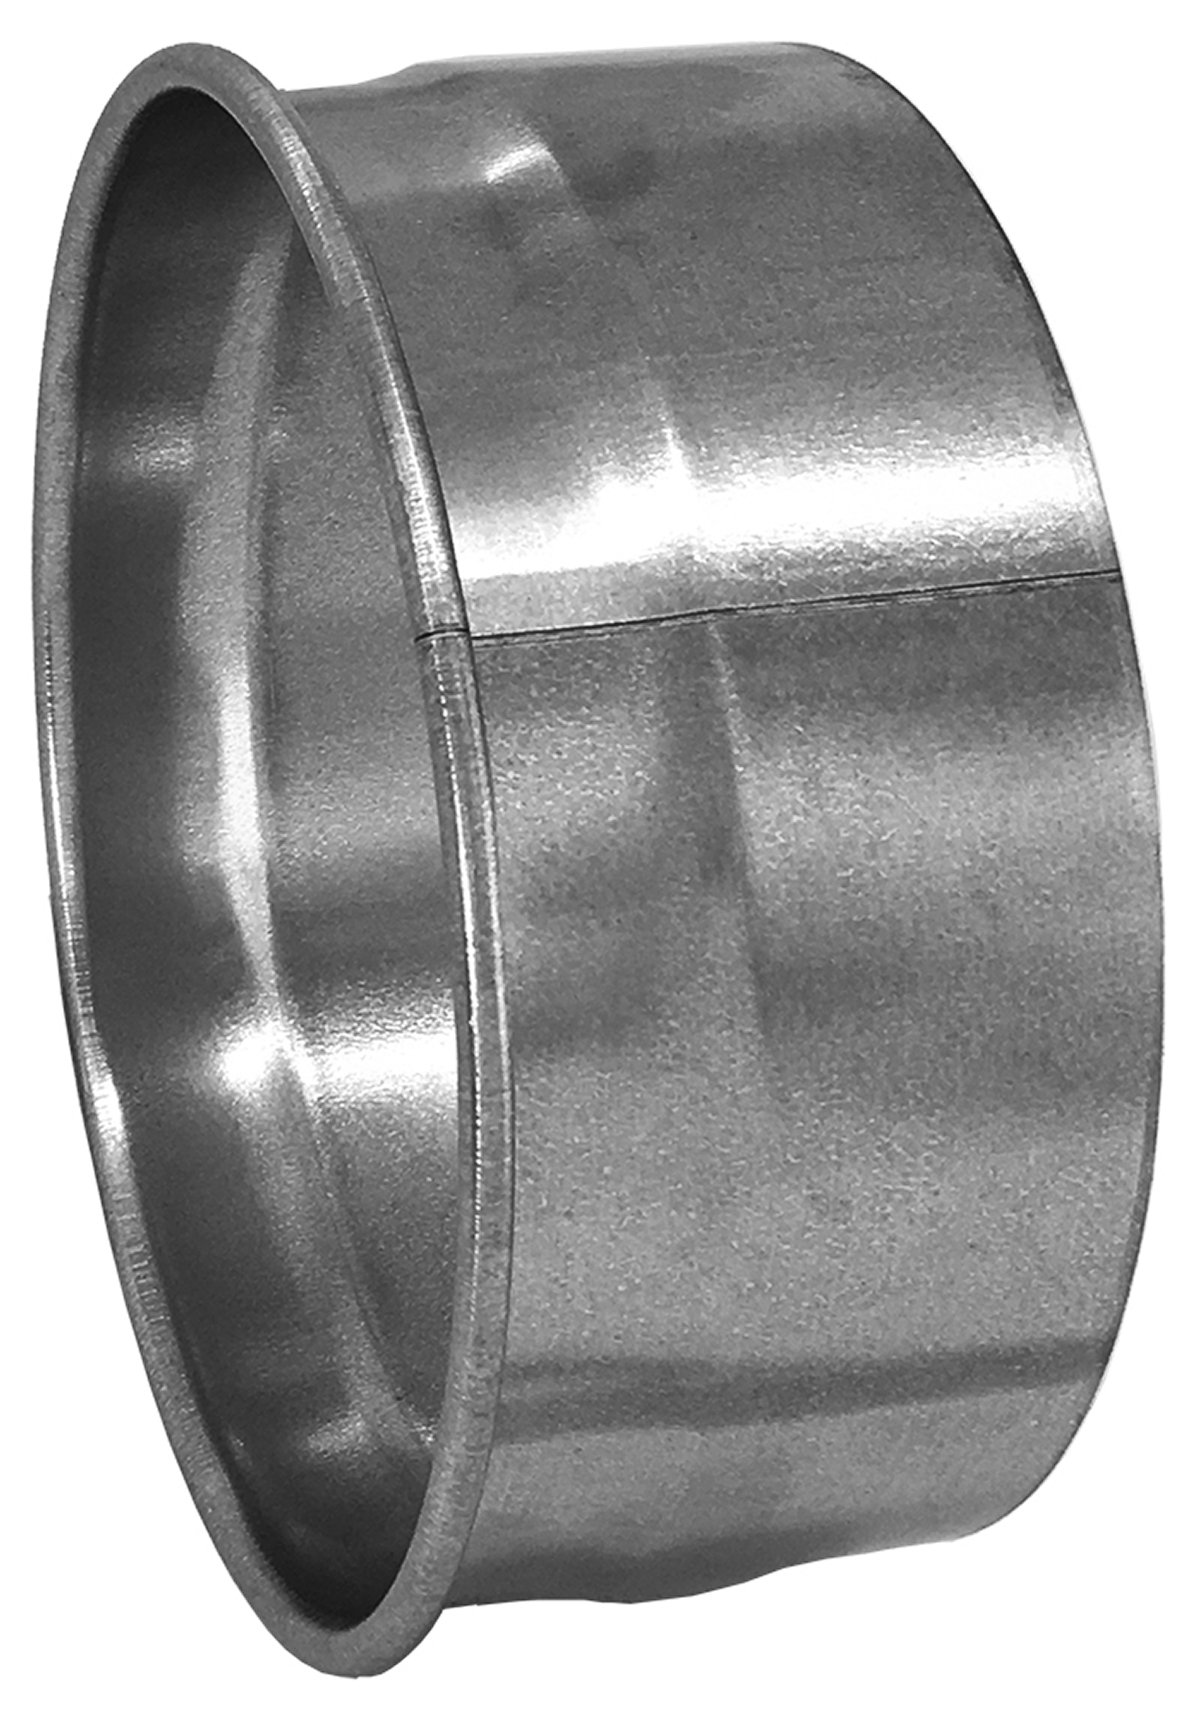 Galvanized Steel 14 in Duct Dia 20 GA, NORDFAB 8040401696 Machine Adapter